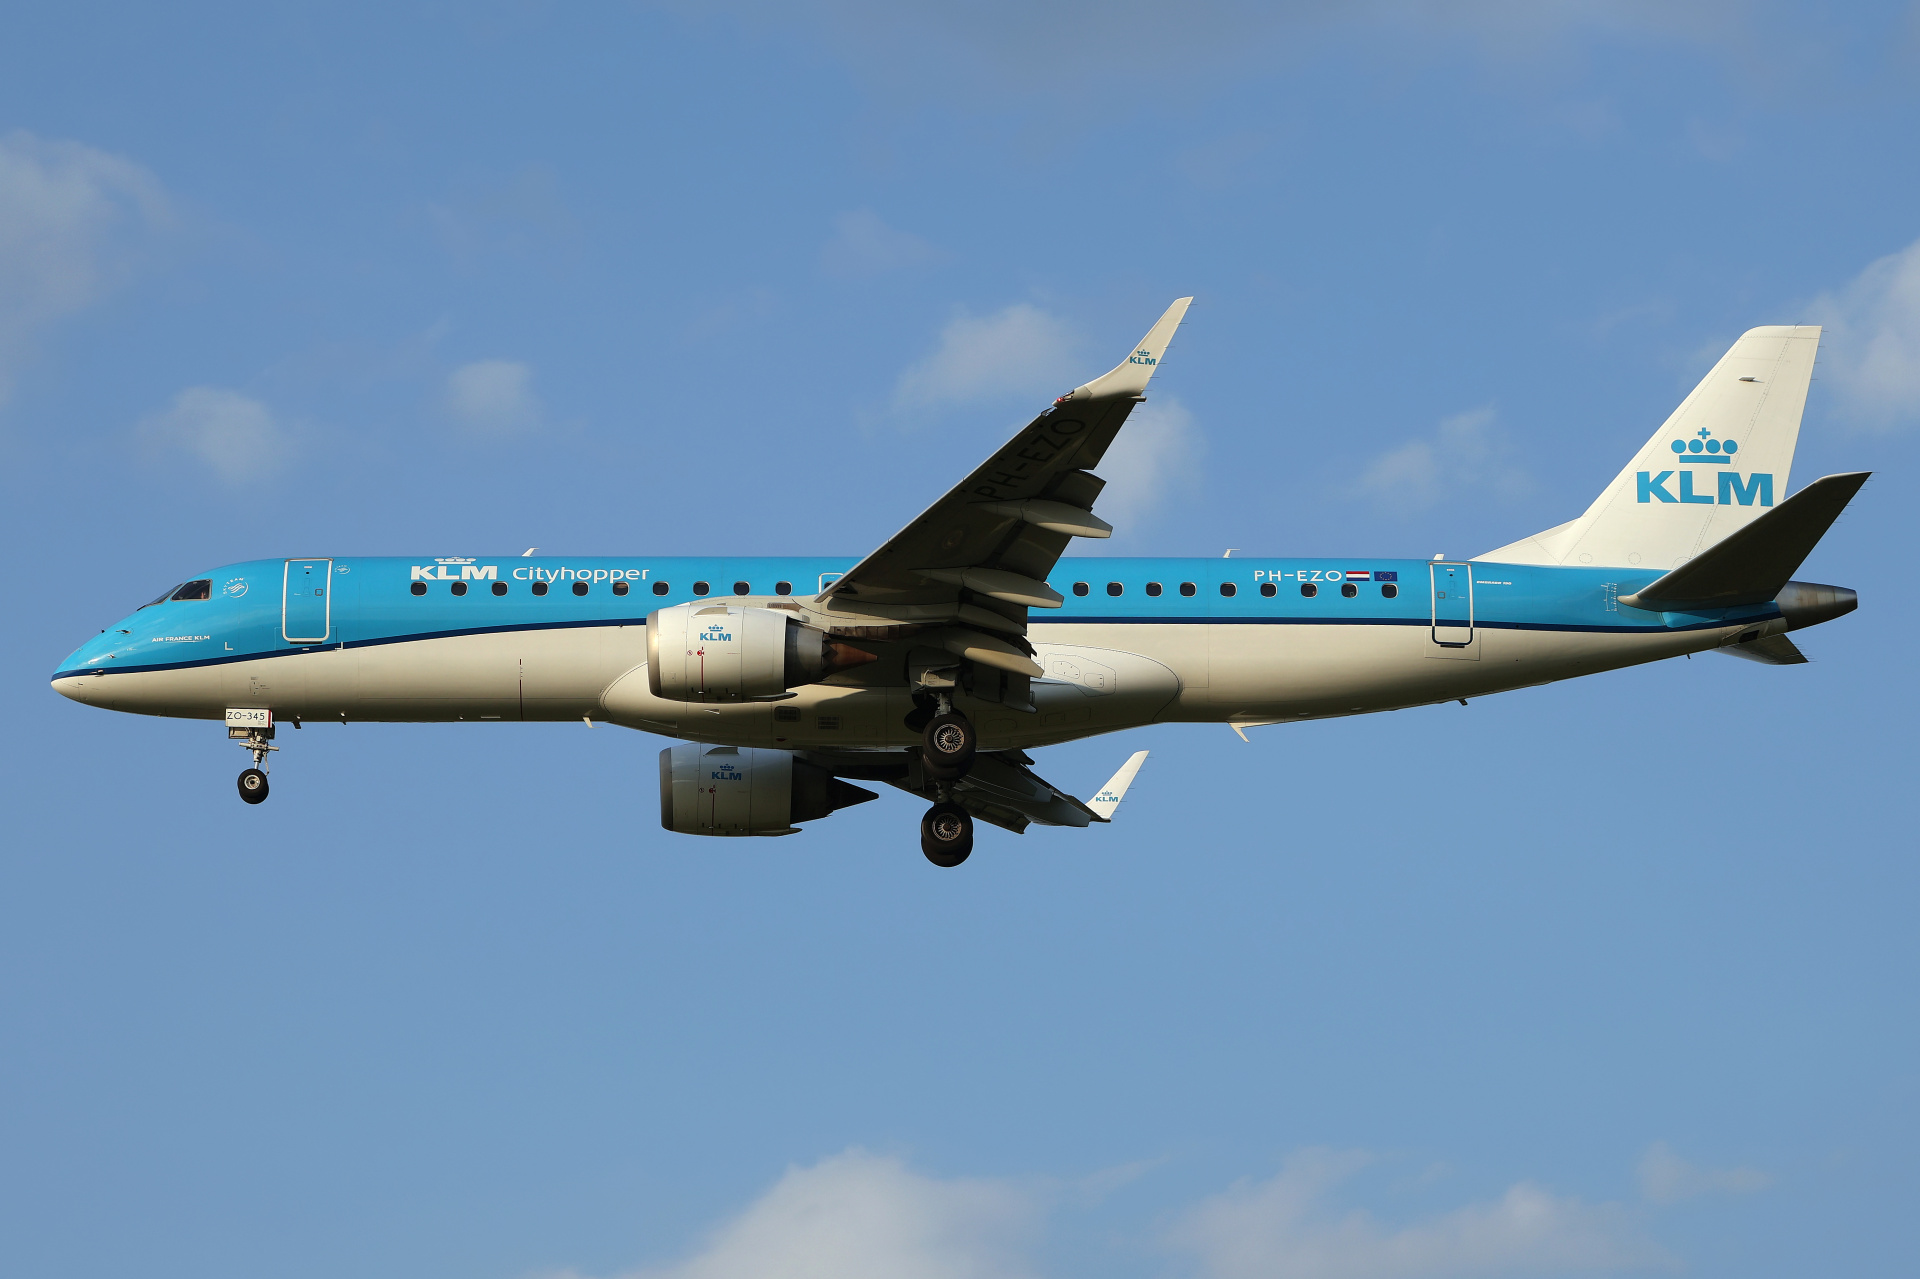 PH-EZO (new livery) (Aircraft » EPWA Spotting » Embraer E190 » KLM Cityhopper)